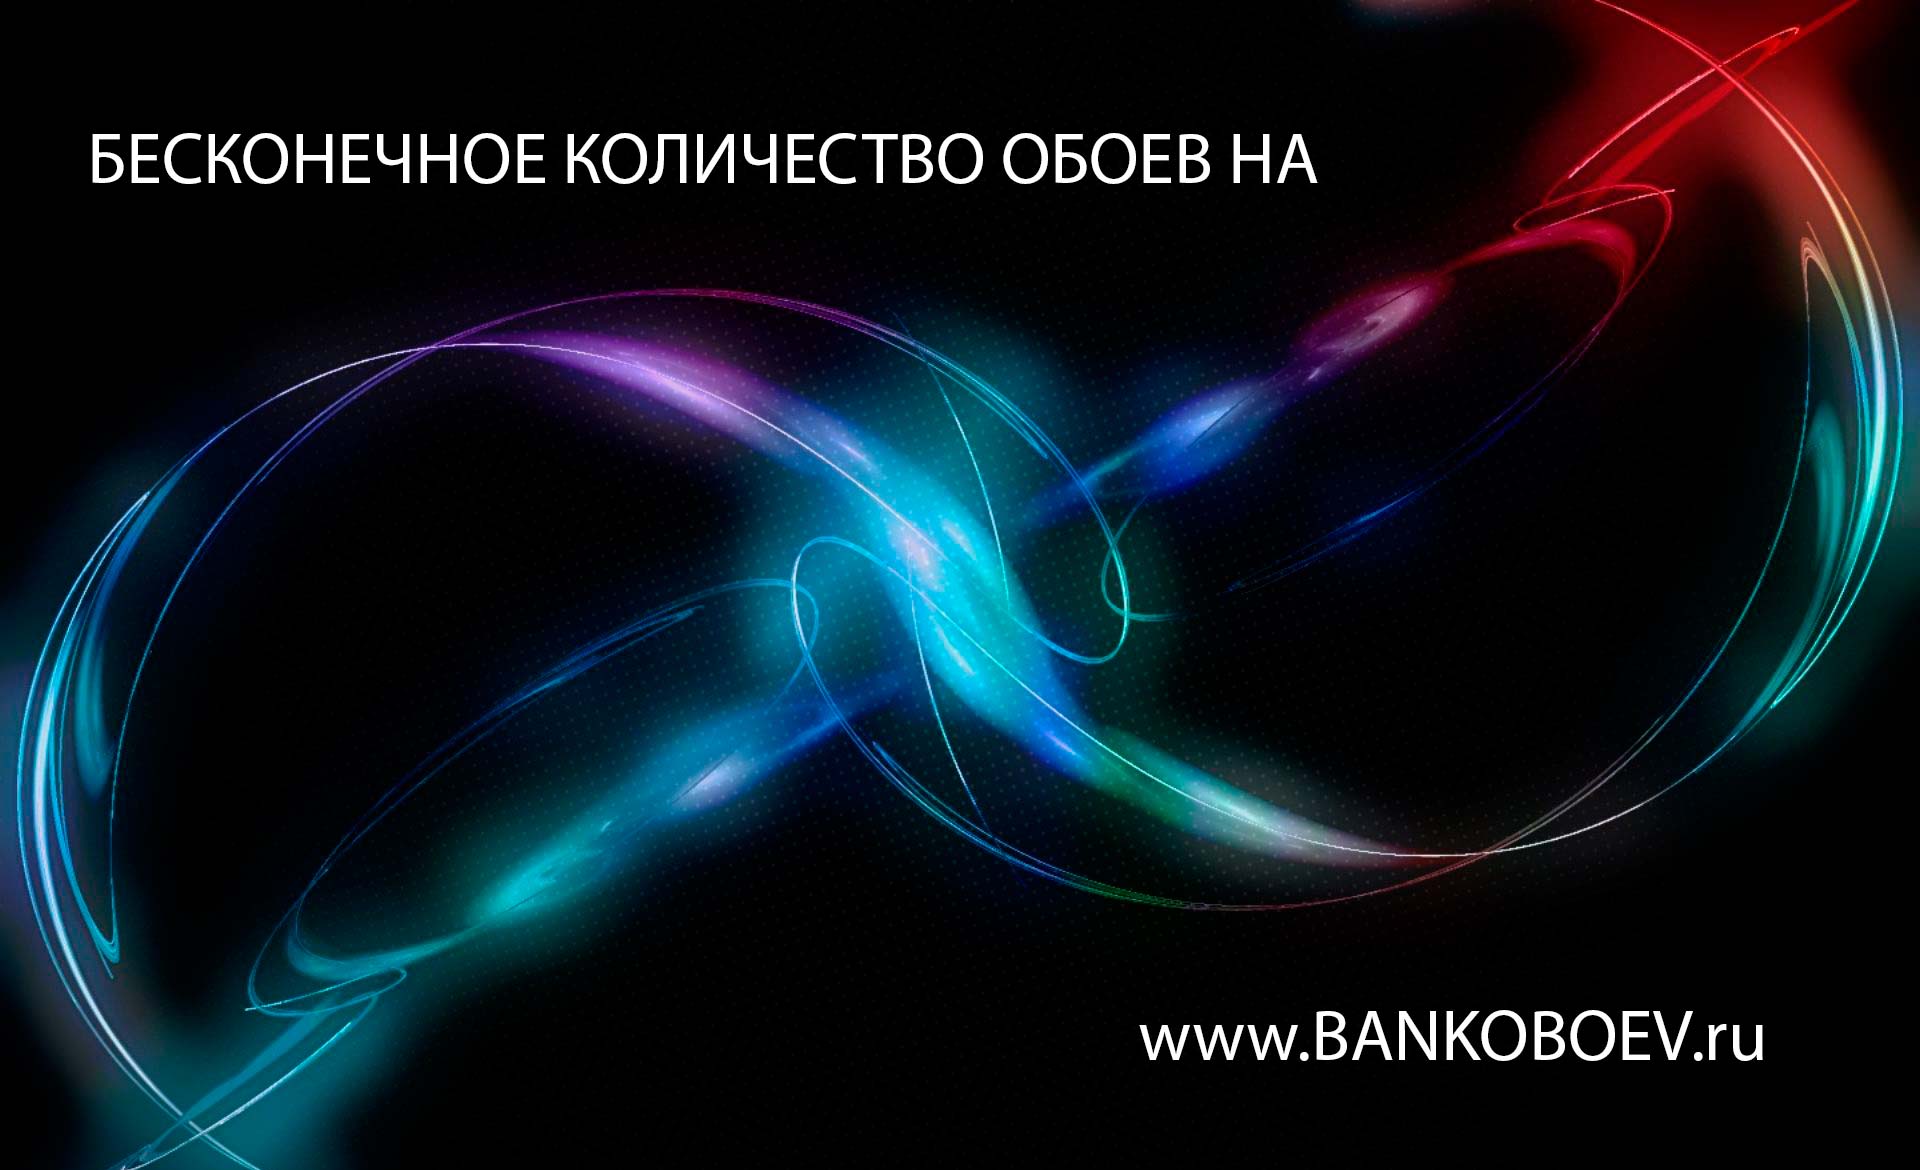 Bankoboev Ru Image Mjq1oda5 Jpg